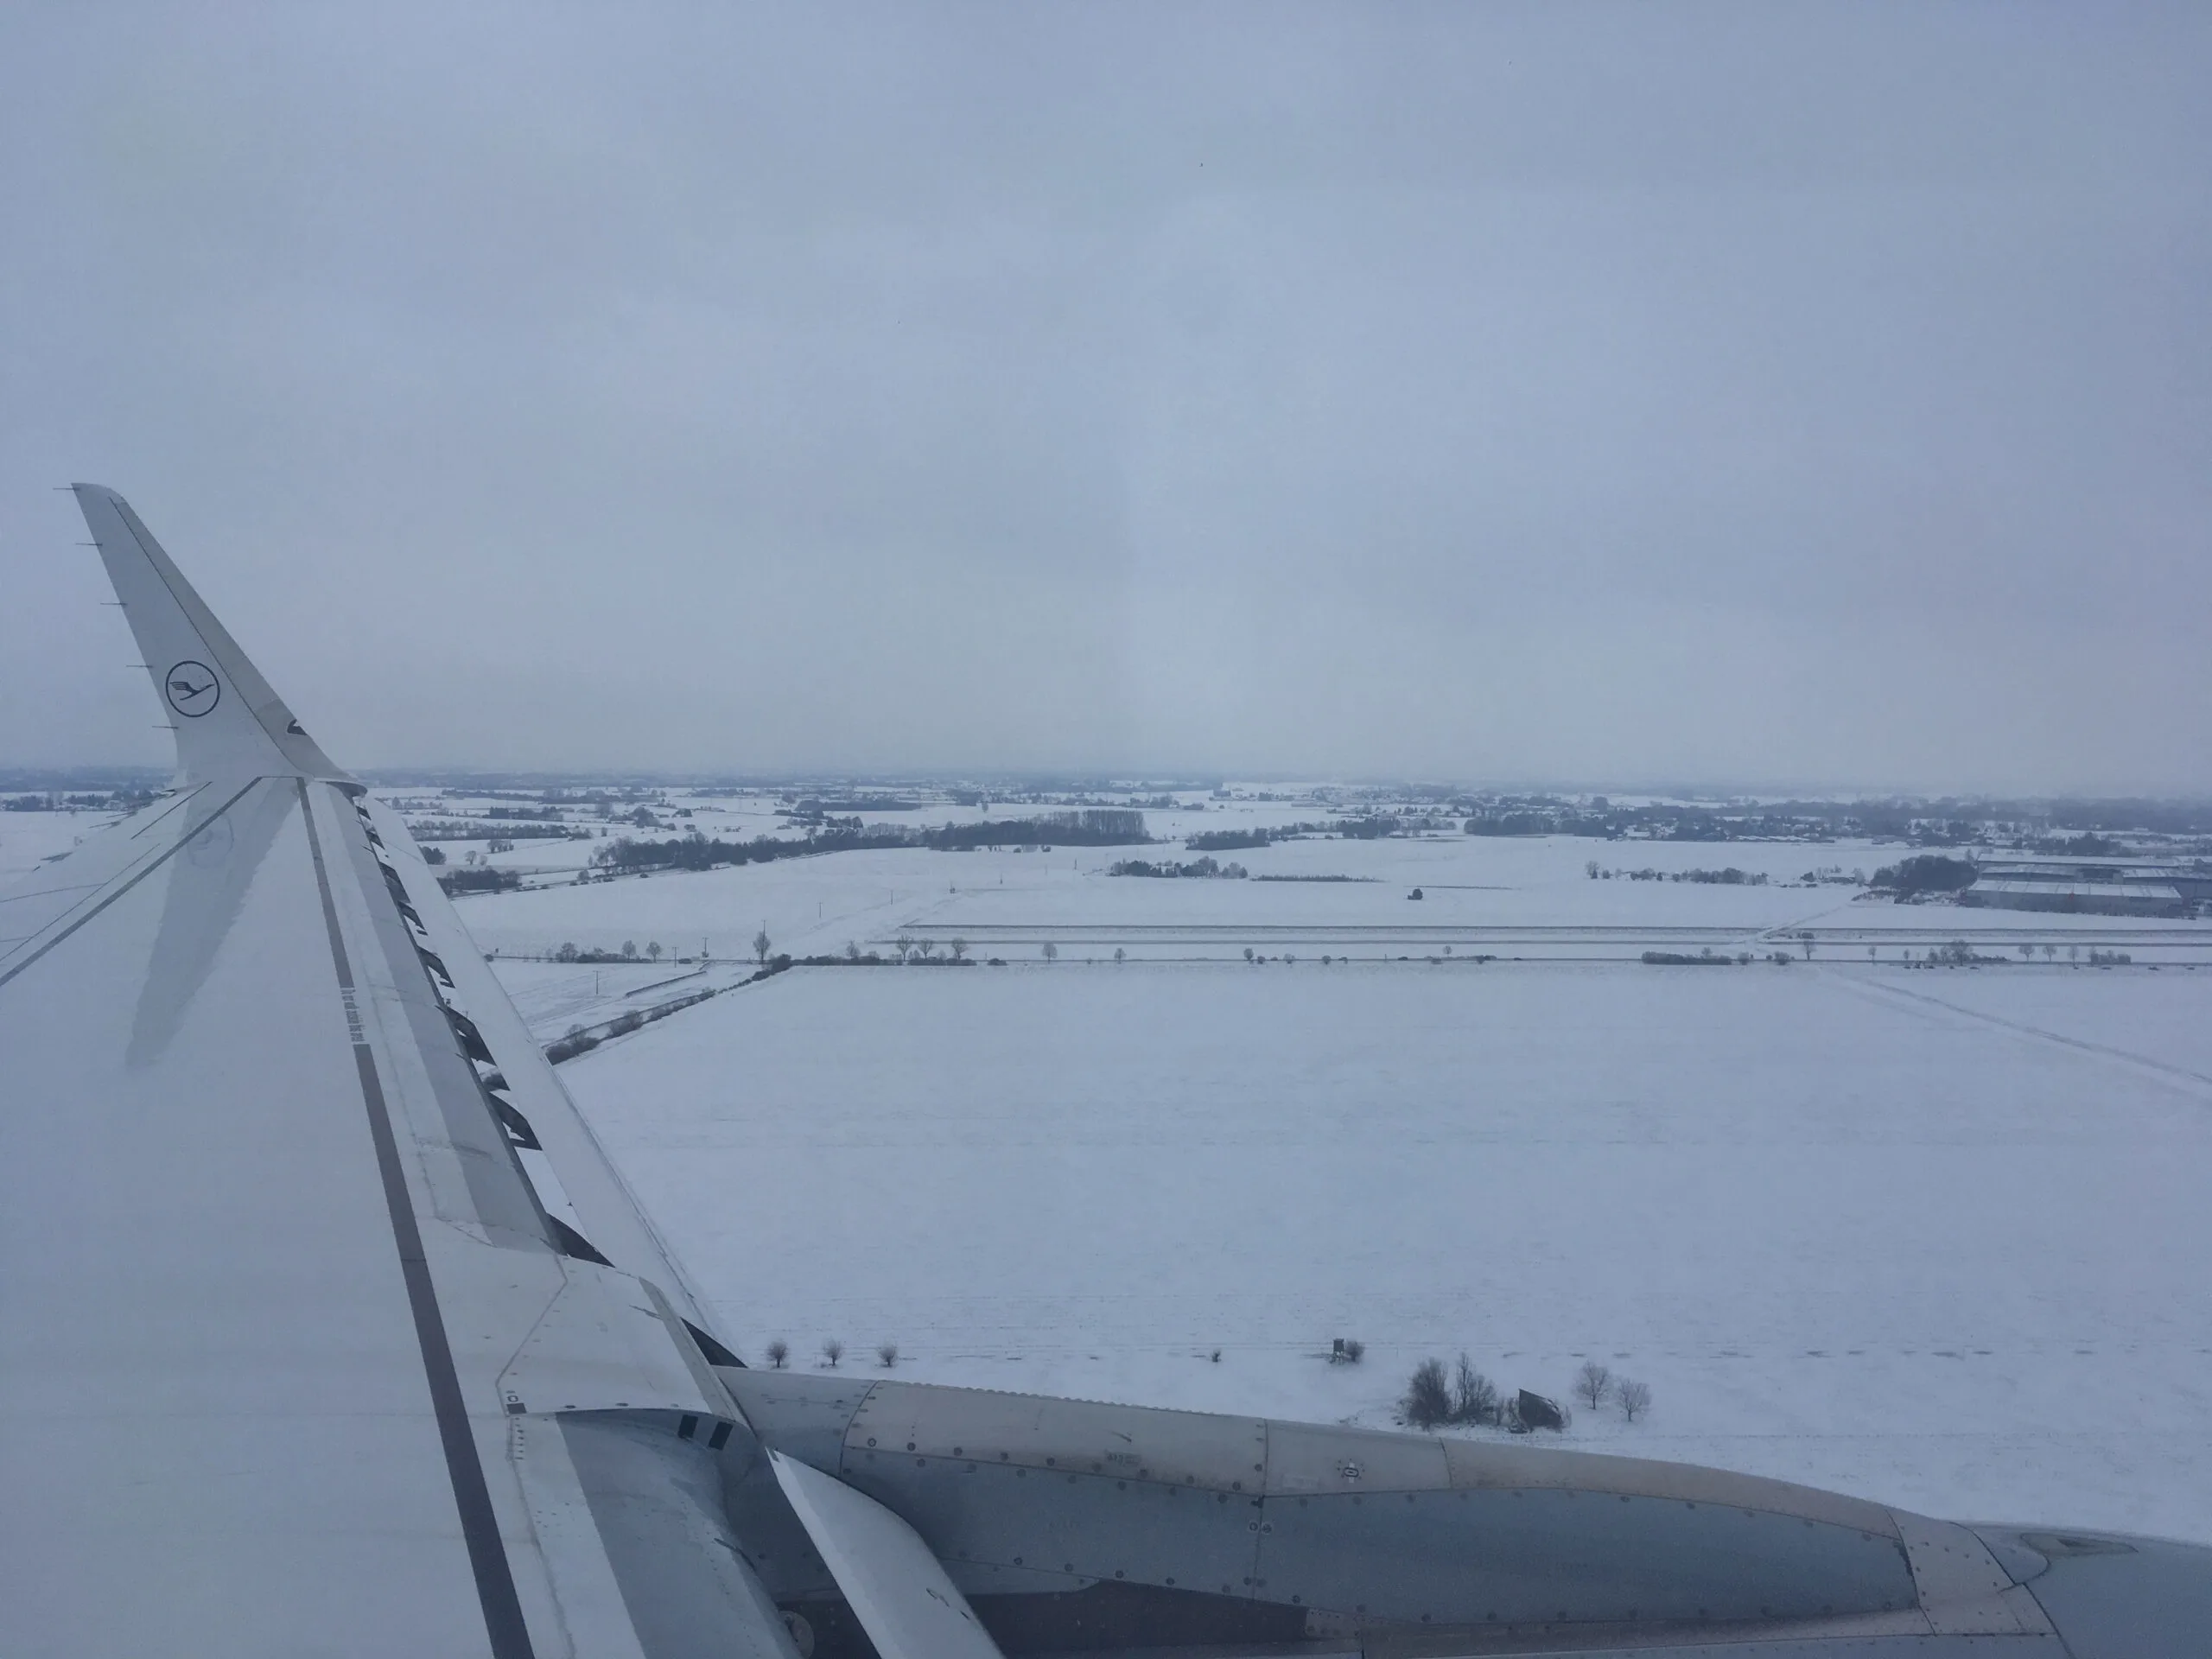 Lufthansa Plane Wing in Snow